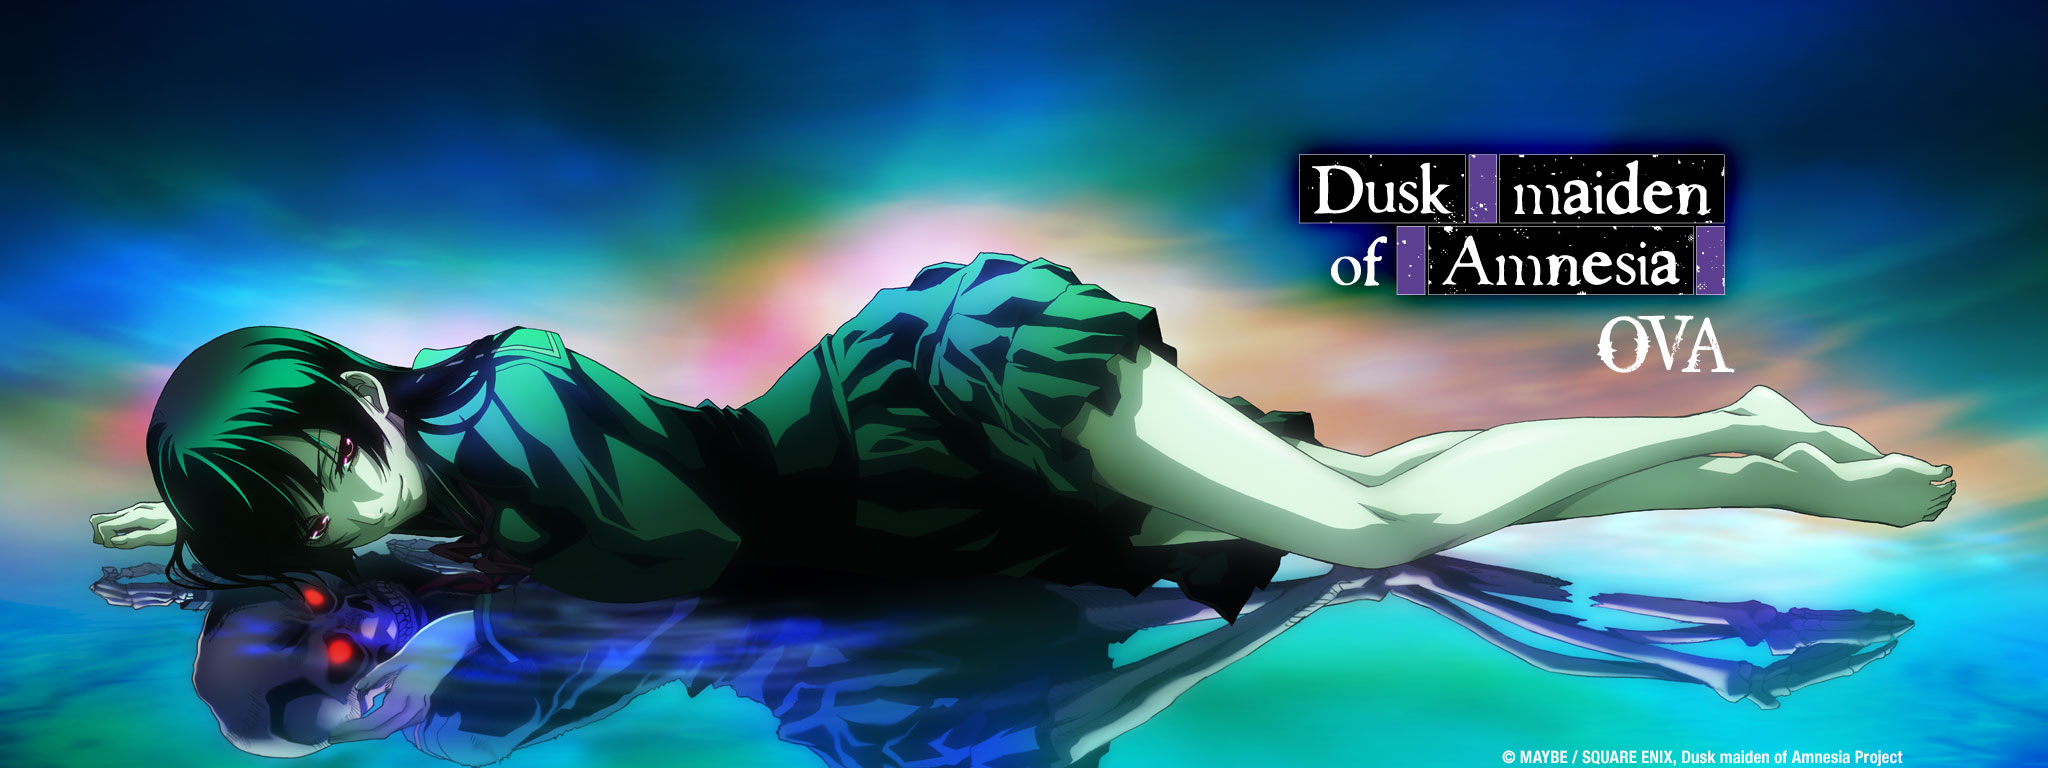 Title Art for Dusk Maiden of Amnesia OVA